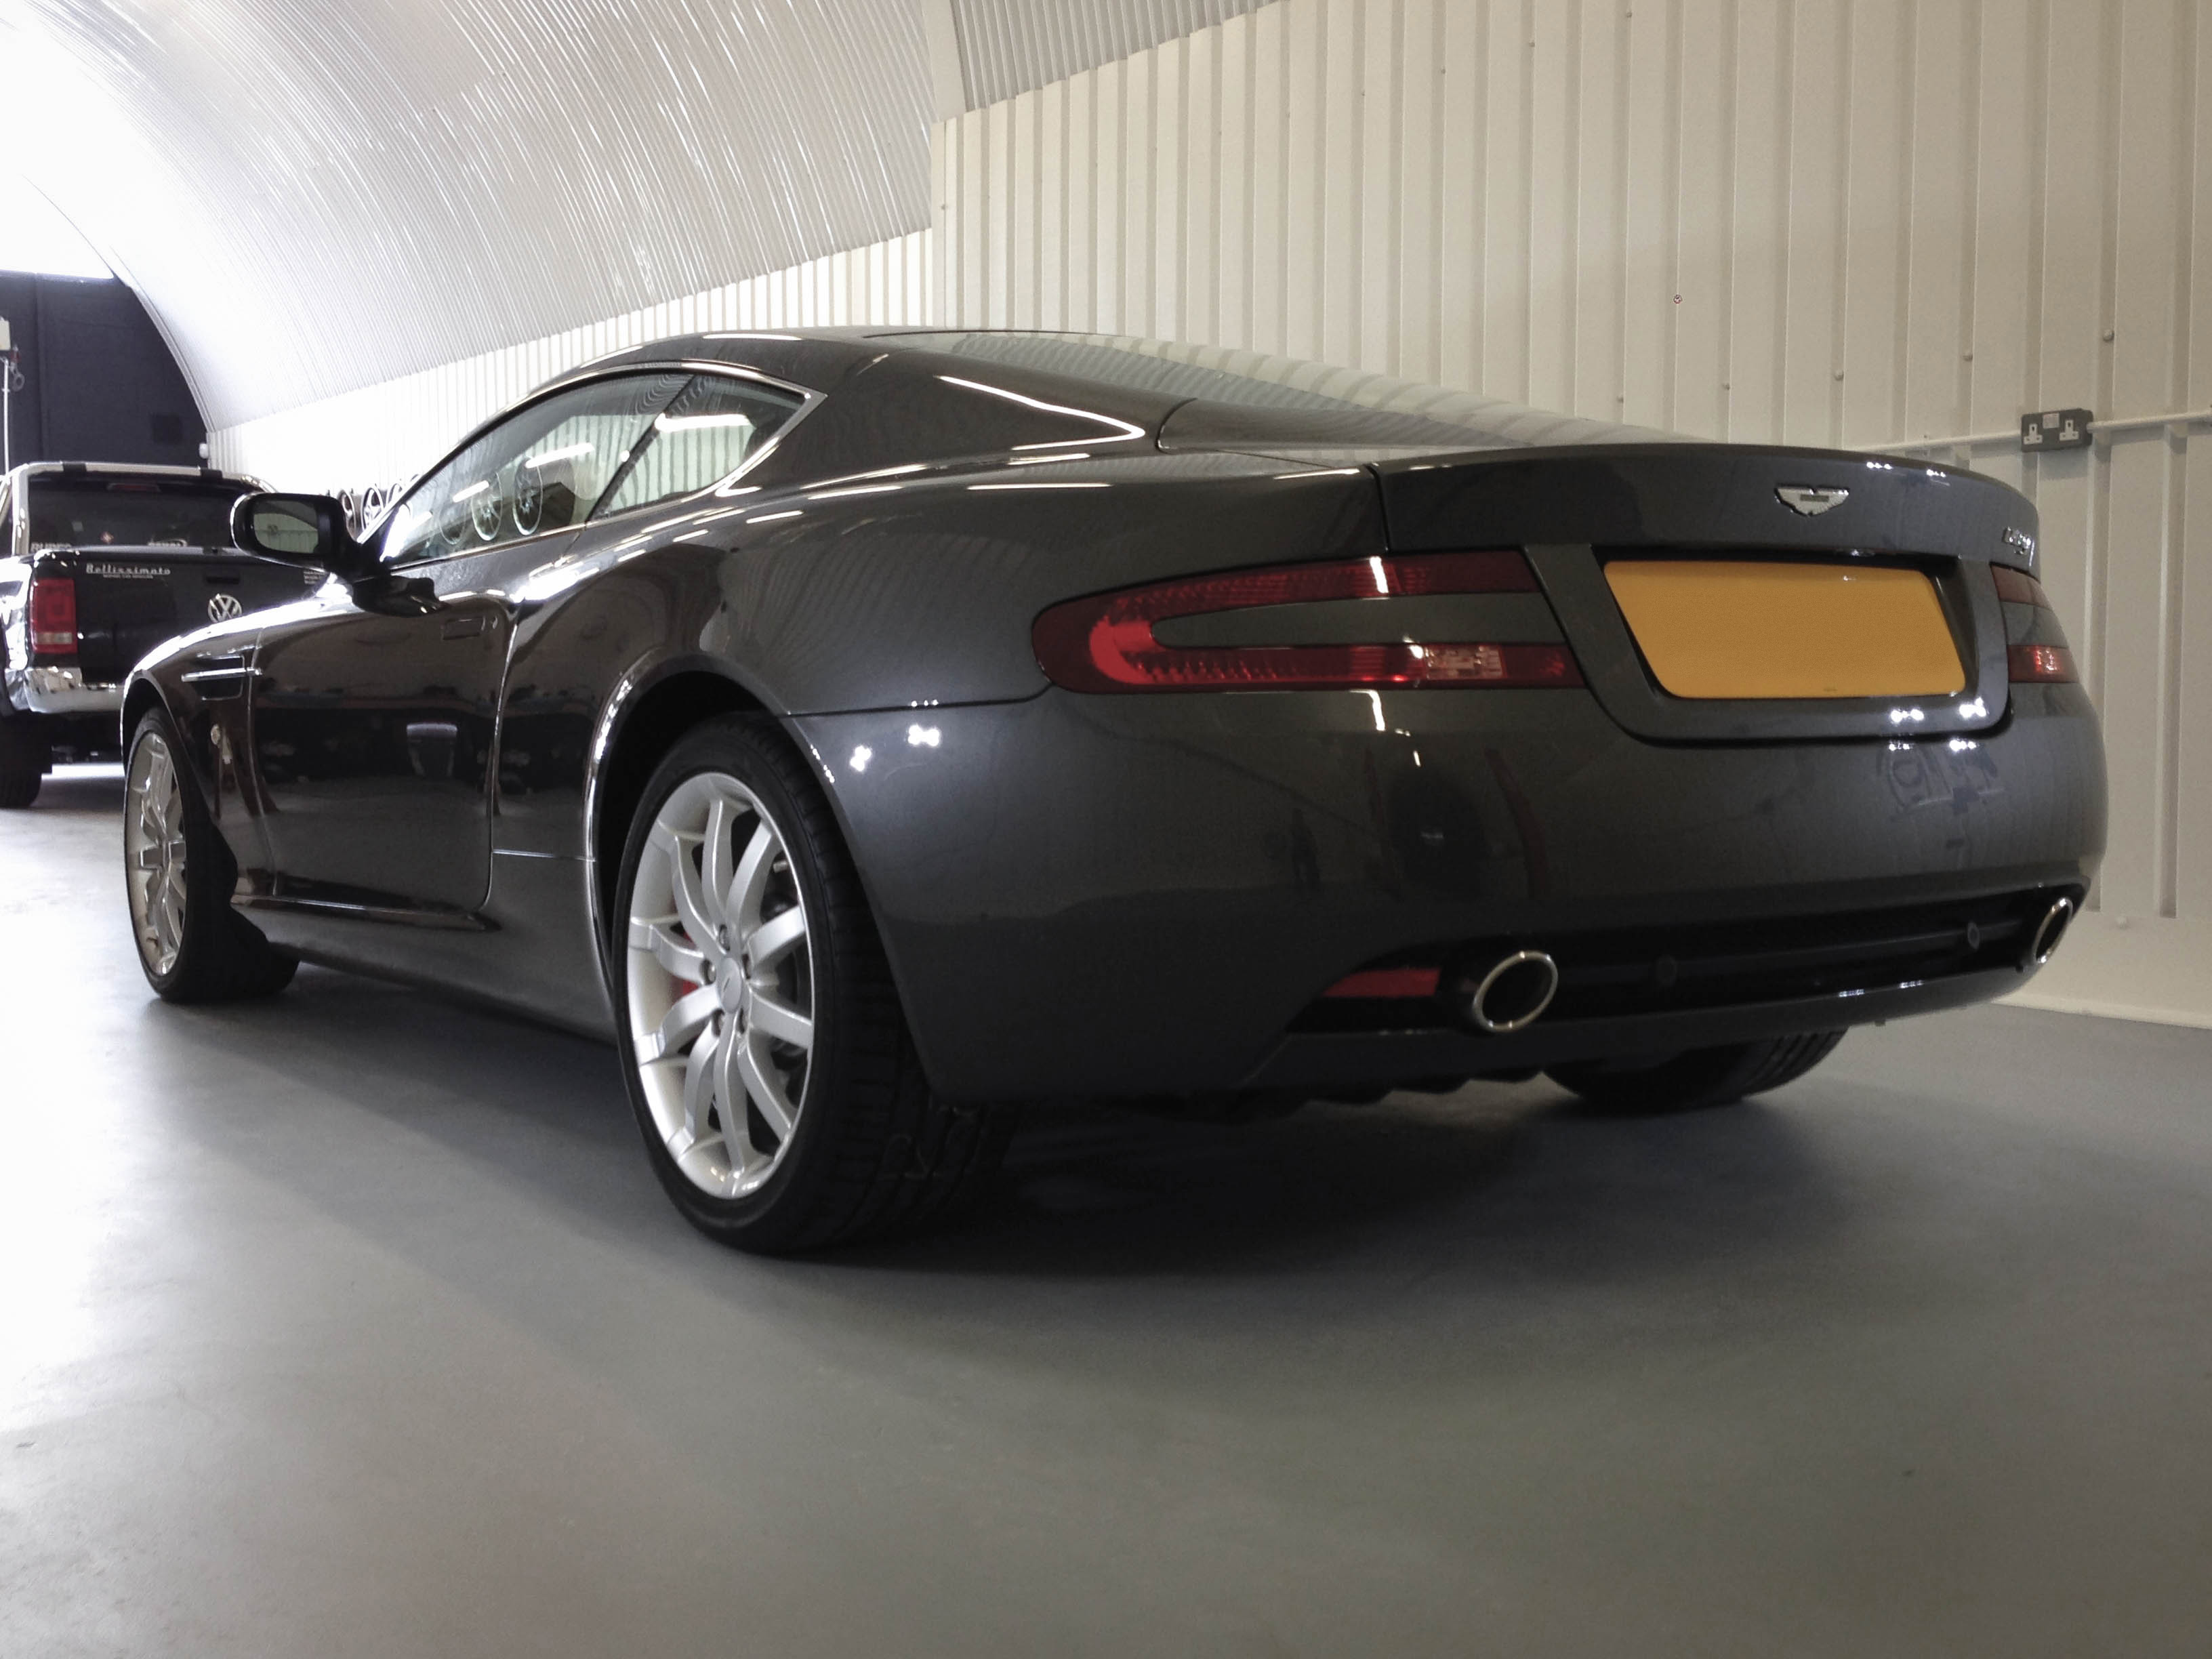 Aston Martin DB9 – Rear